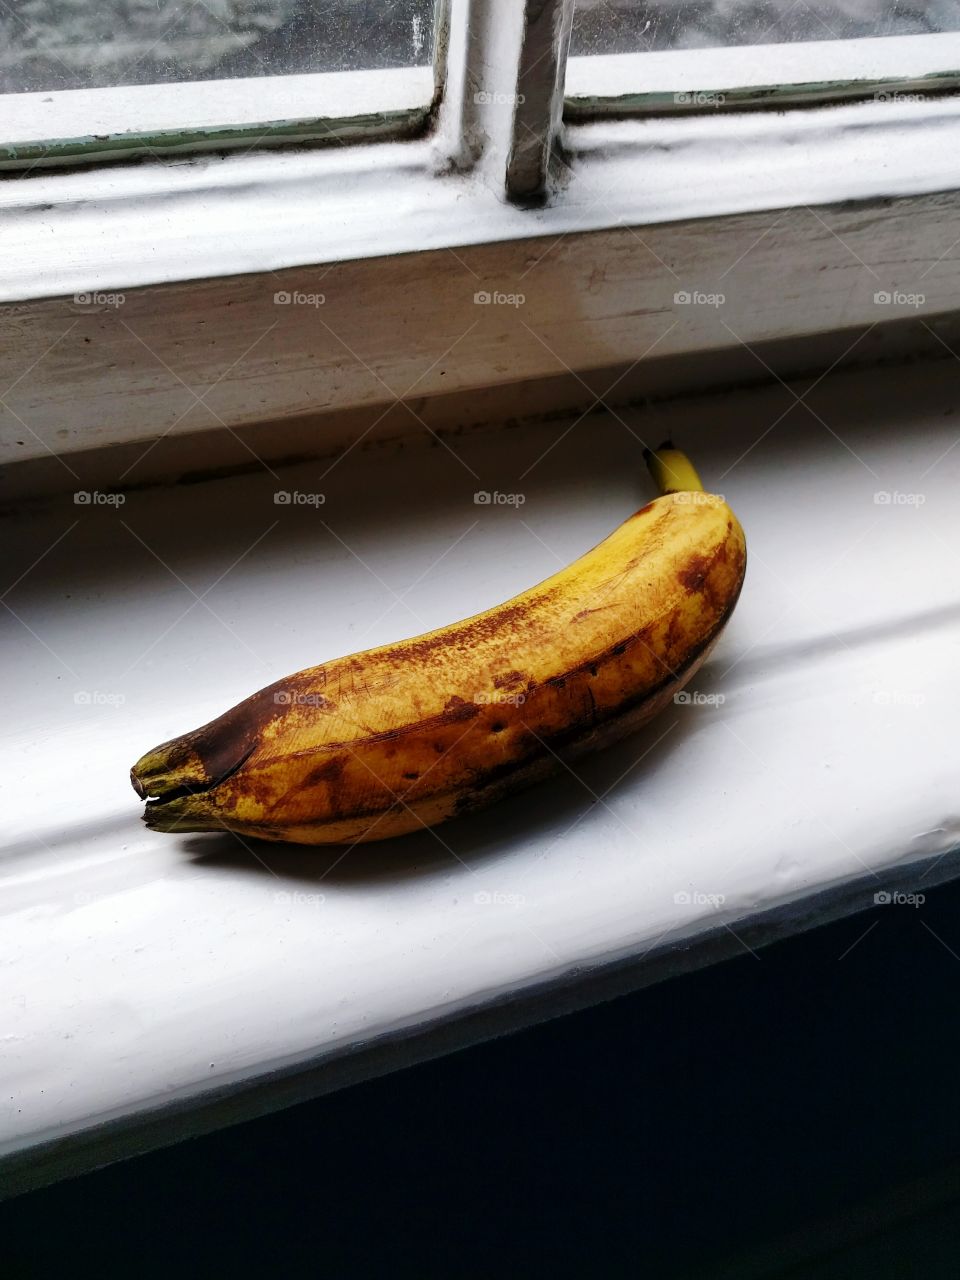 Forgotten banana